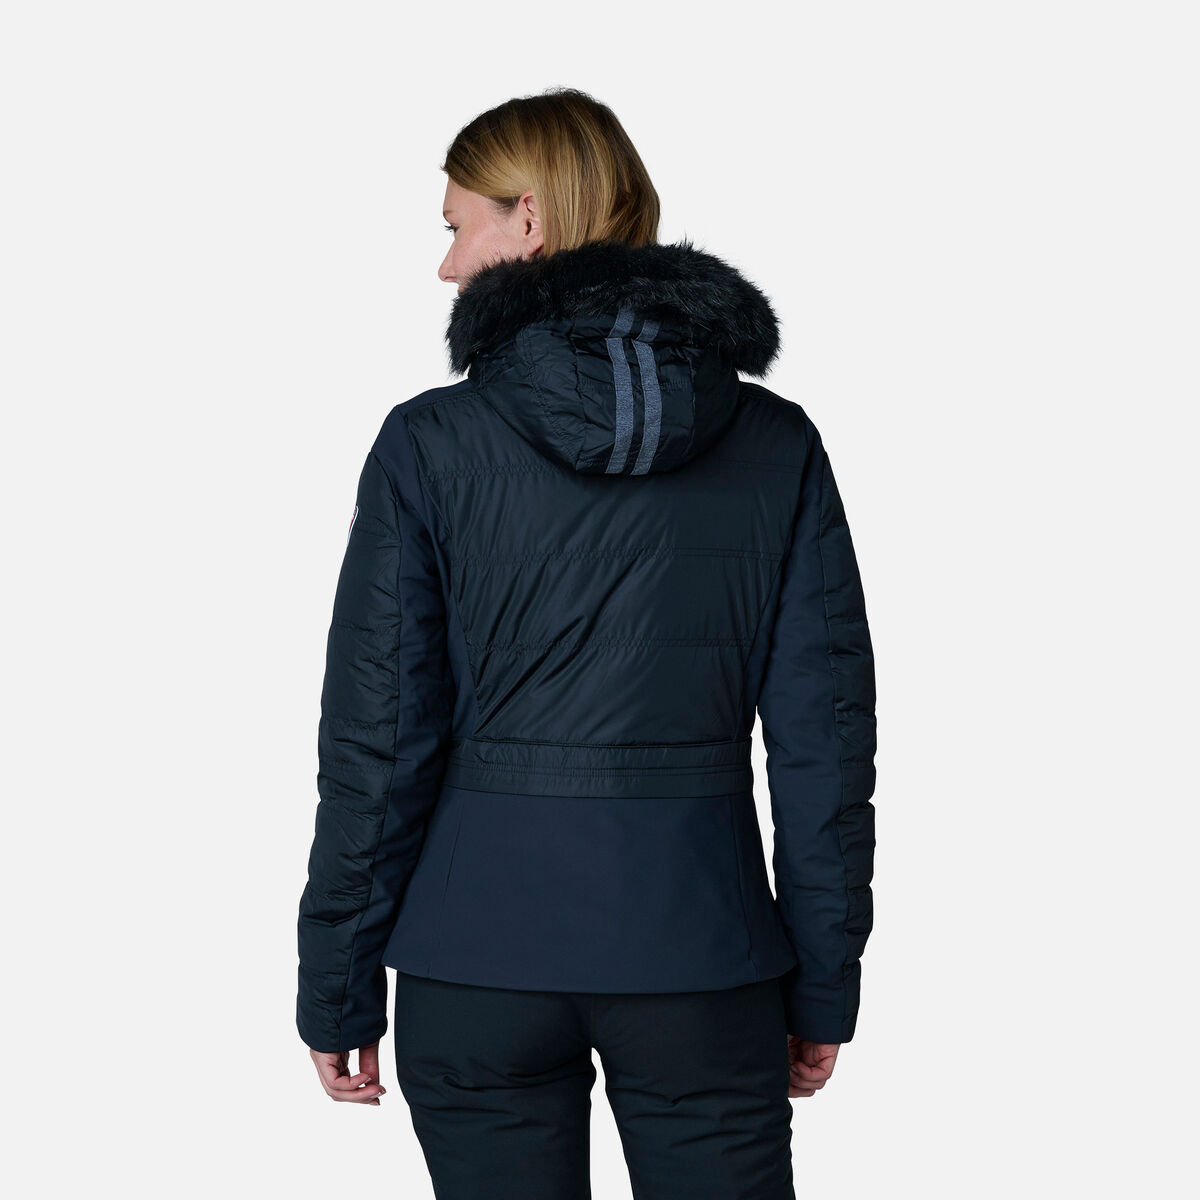 Rossignol Women's Victoire Hybrid Ski Jacket Black